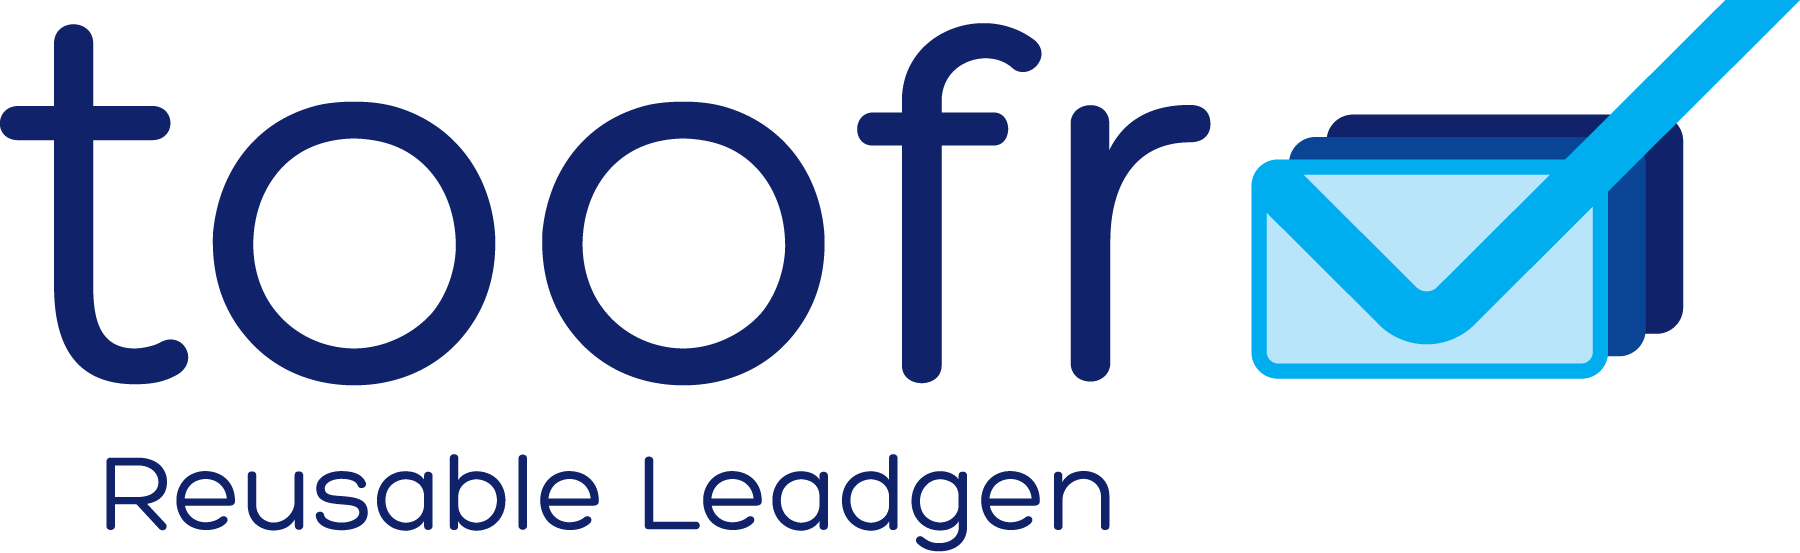 toofr logo